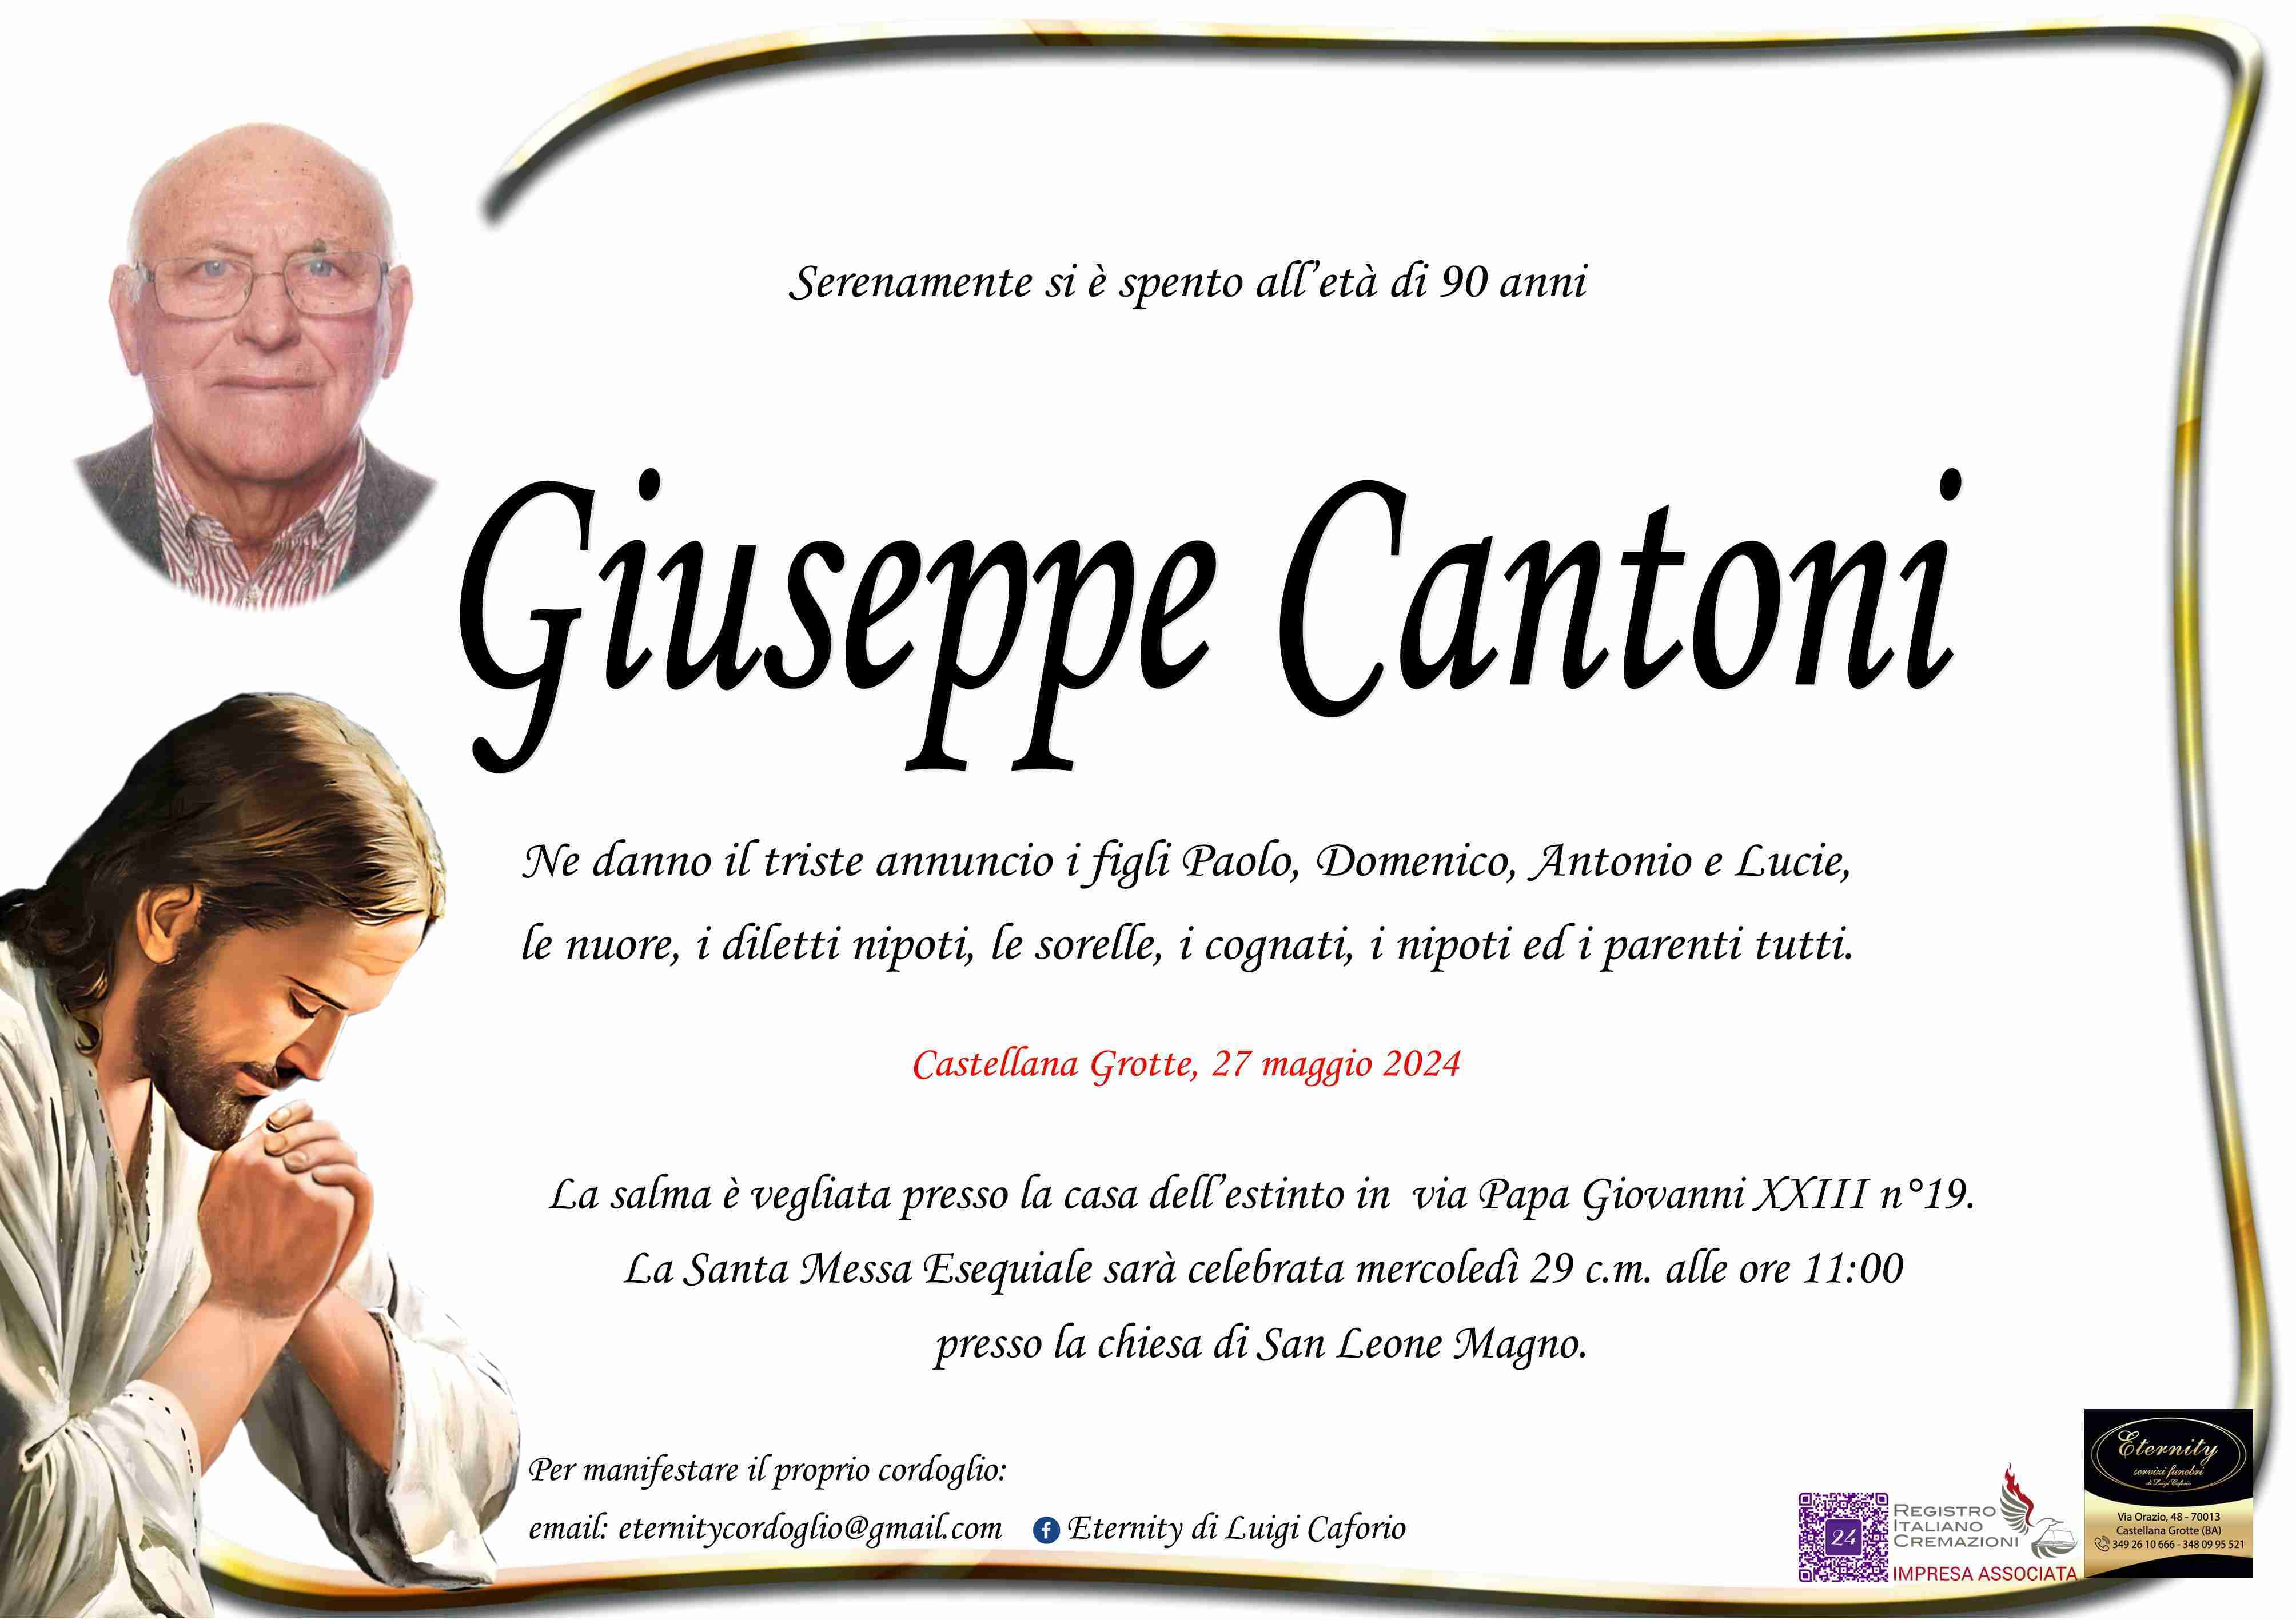 Giuseppe Cantoni